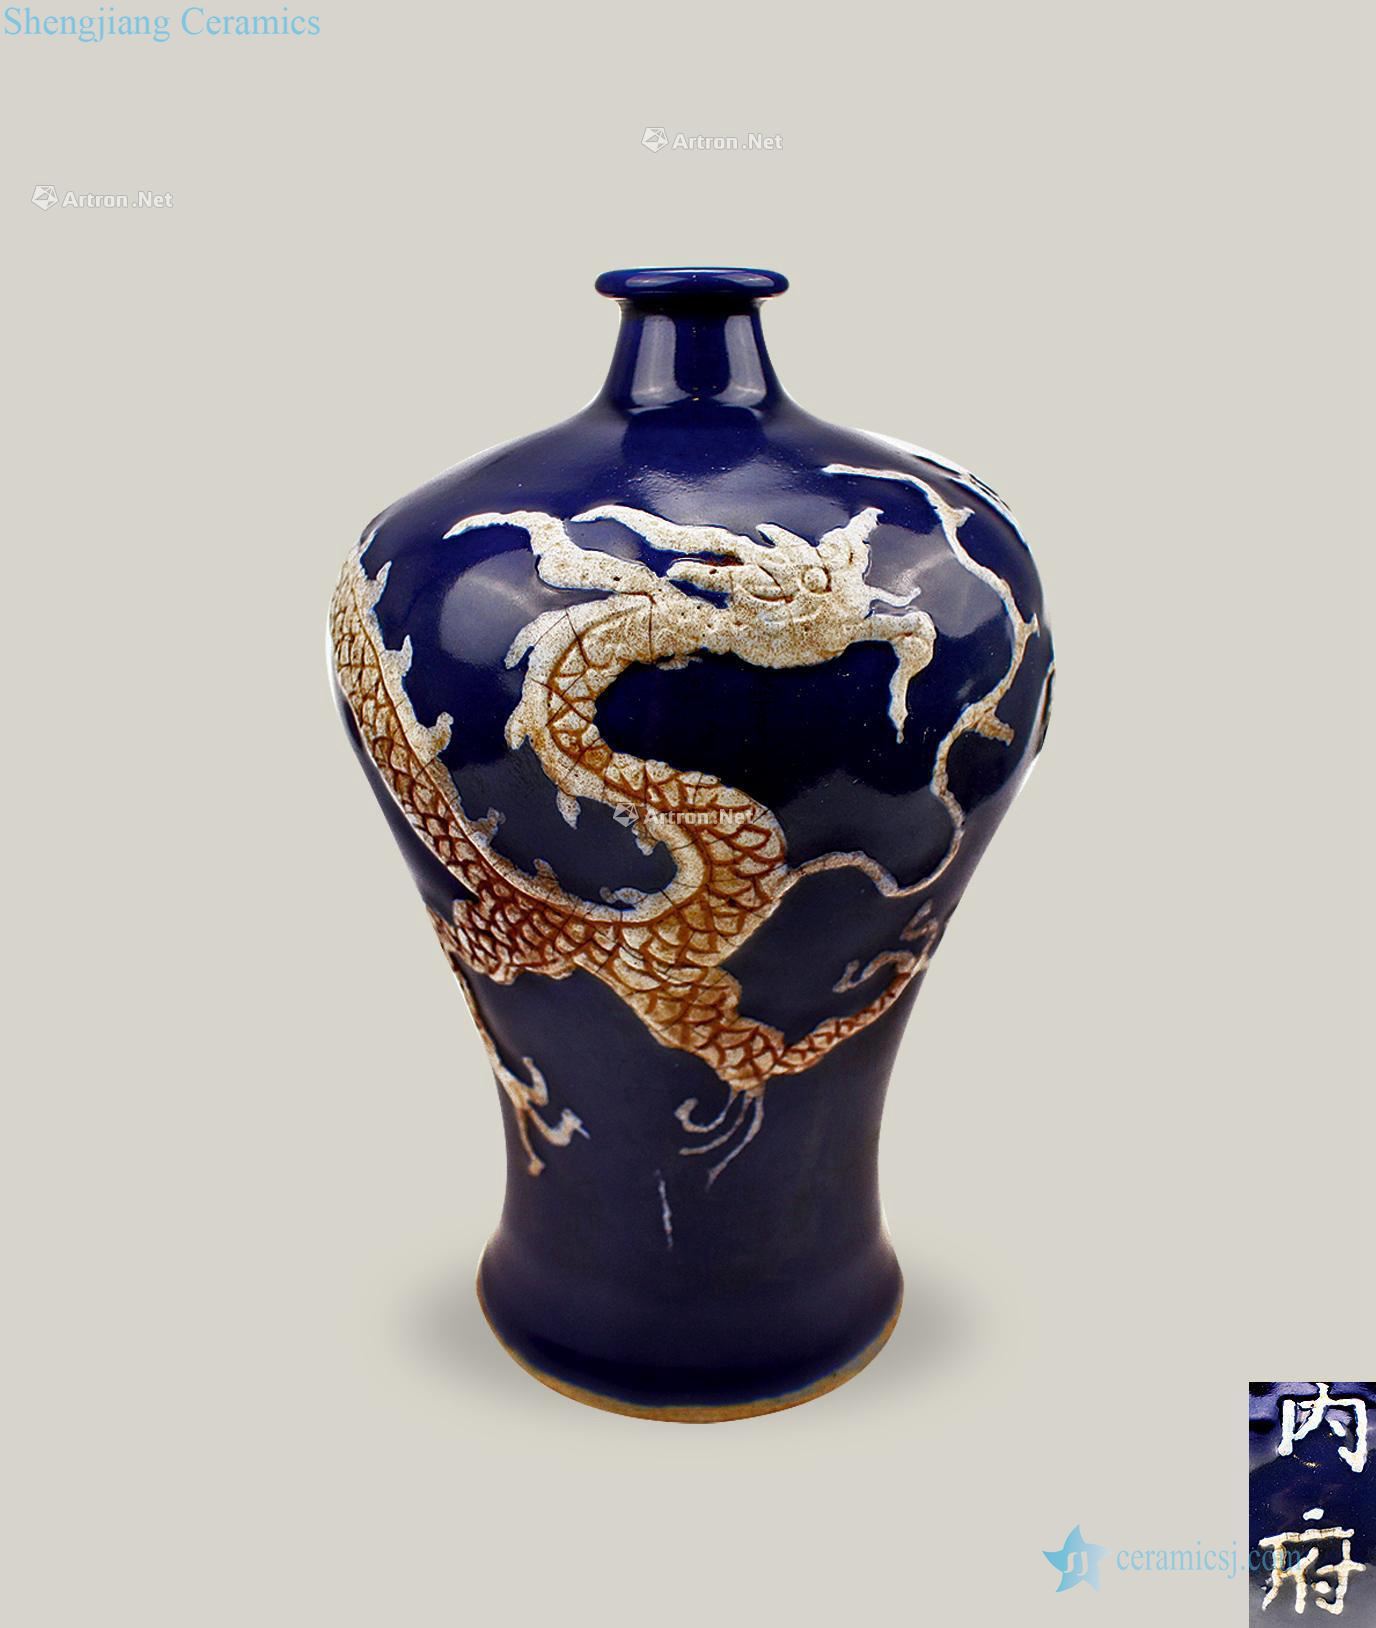 The blue glaze plastic coated dragon bottle